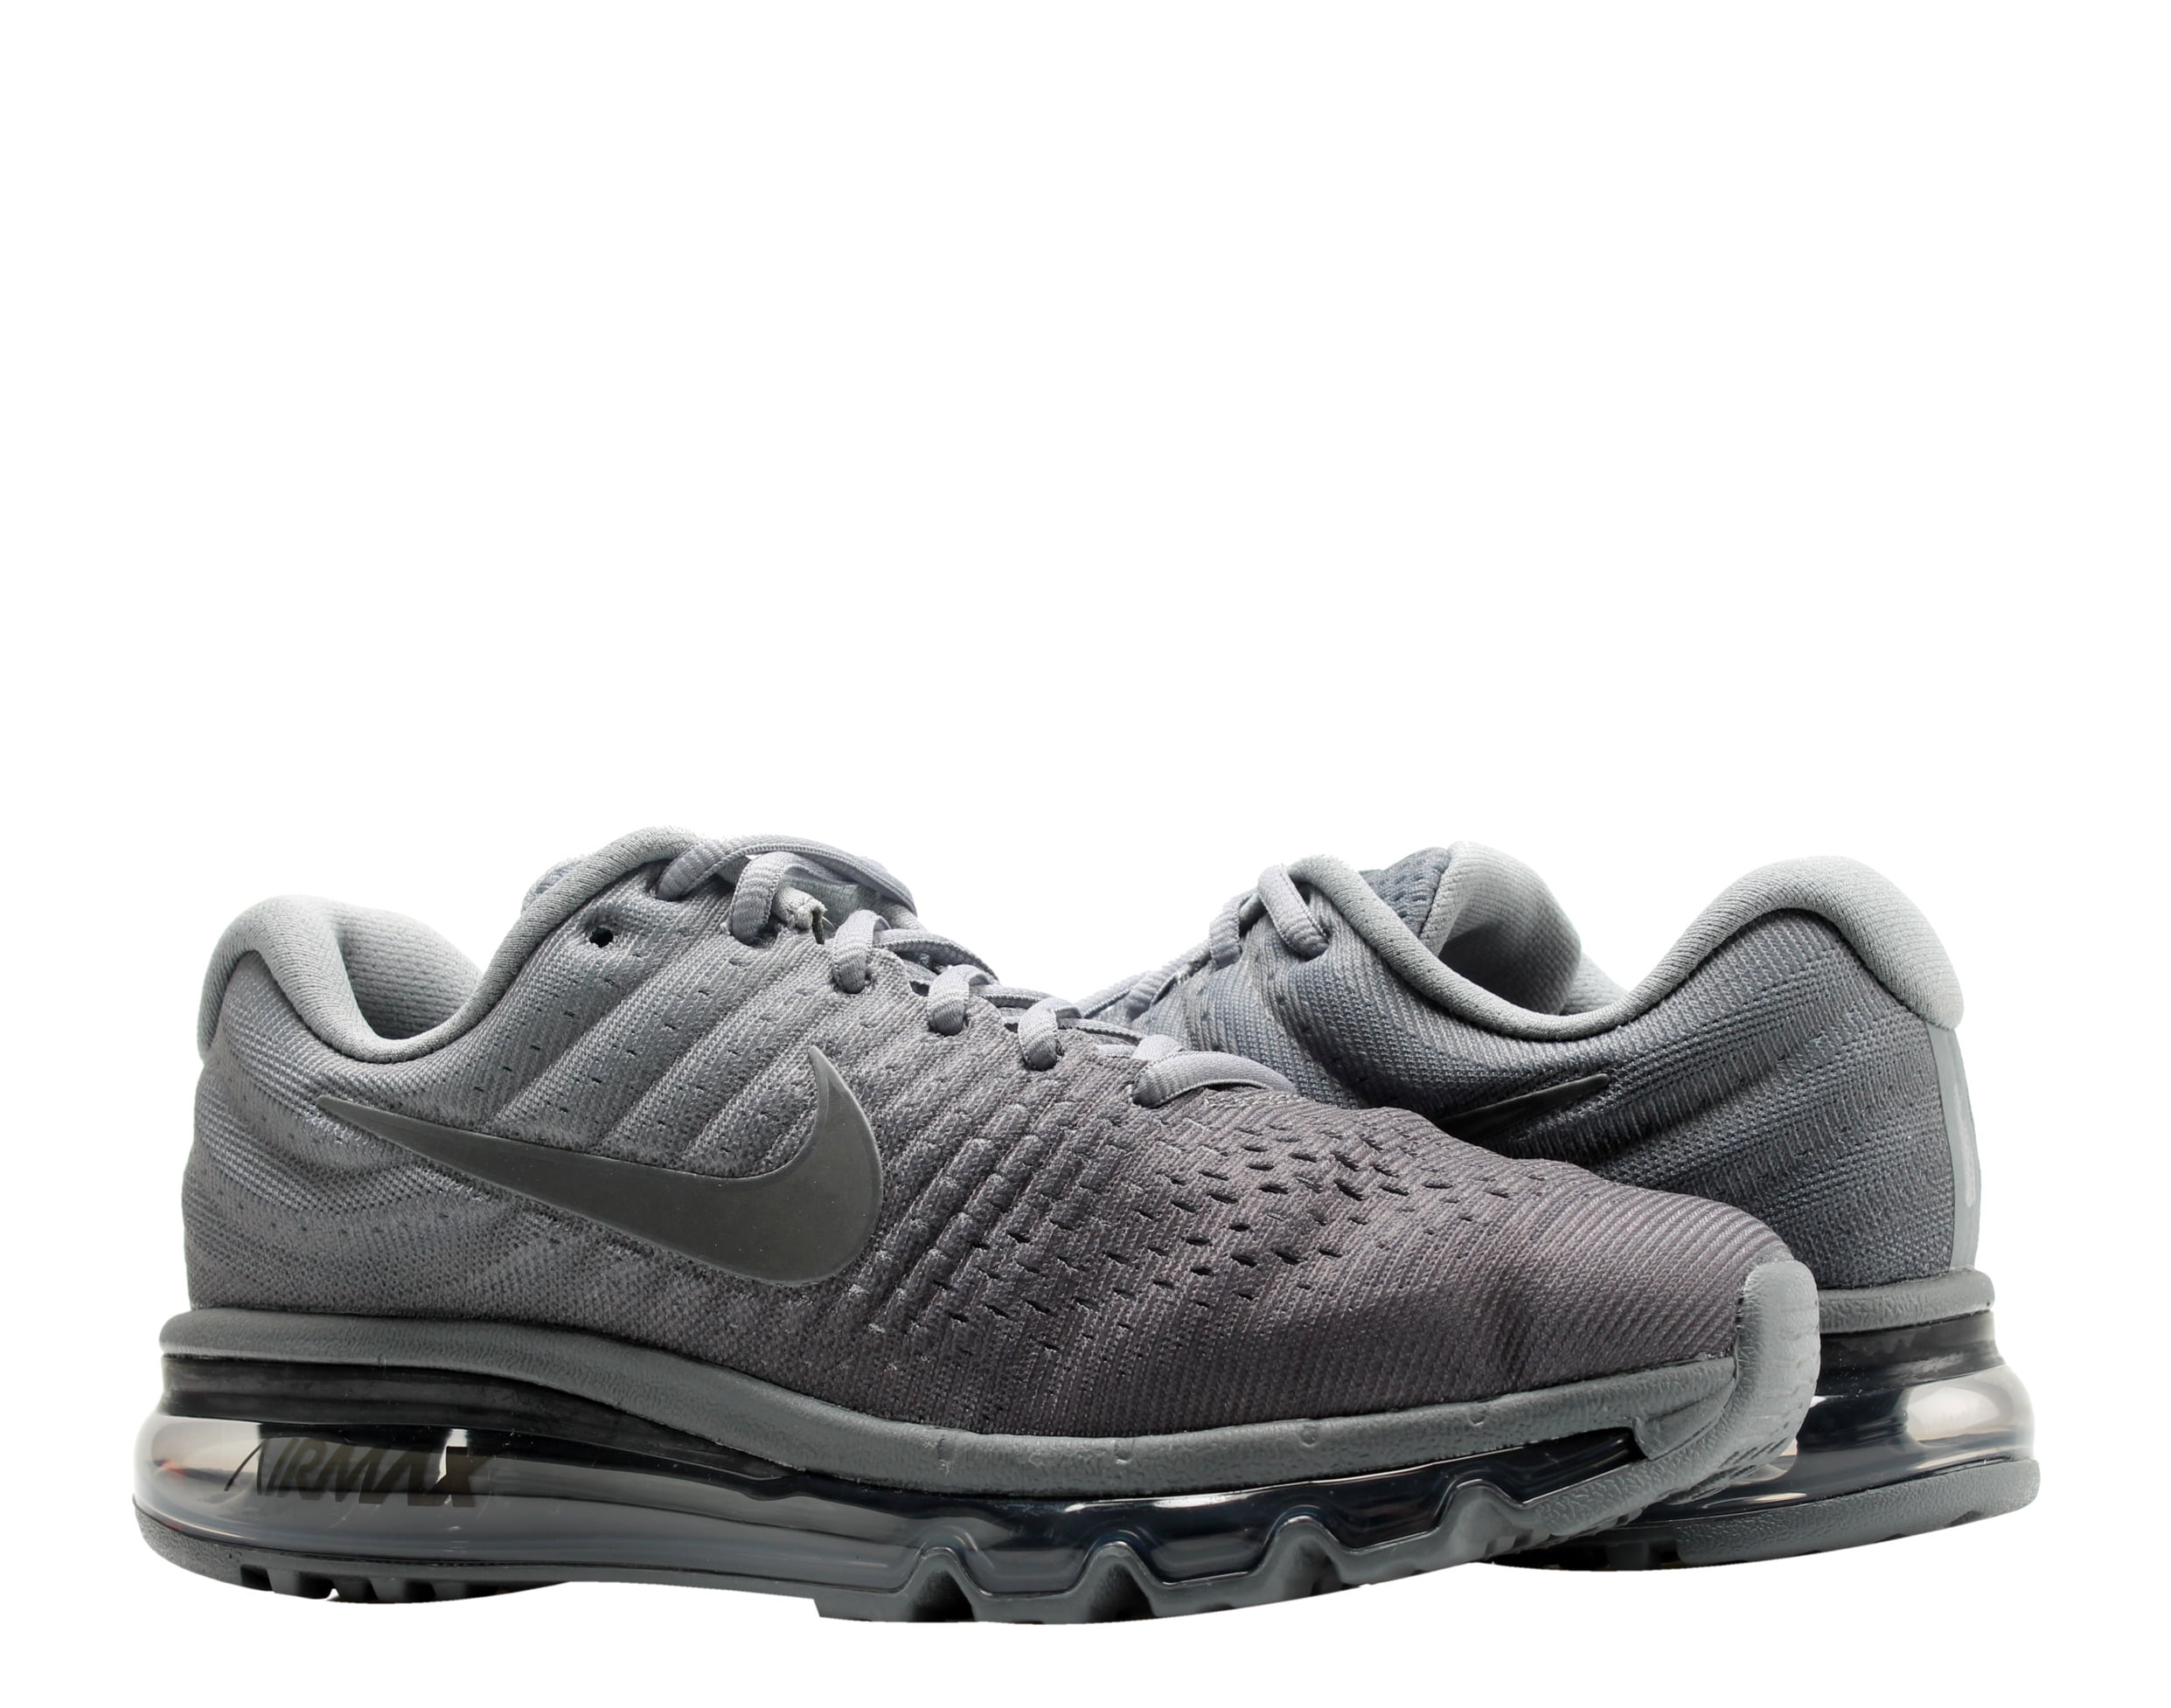 sentido común sagrado Saludo Nike Air Max 2017 Men's Running Shoes Size 9 - Walmart.com